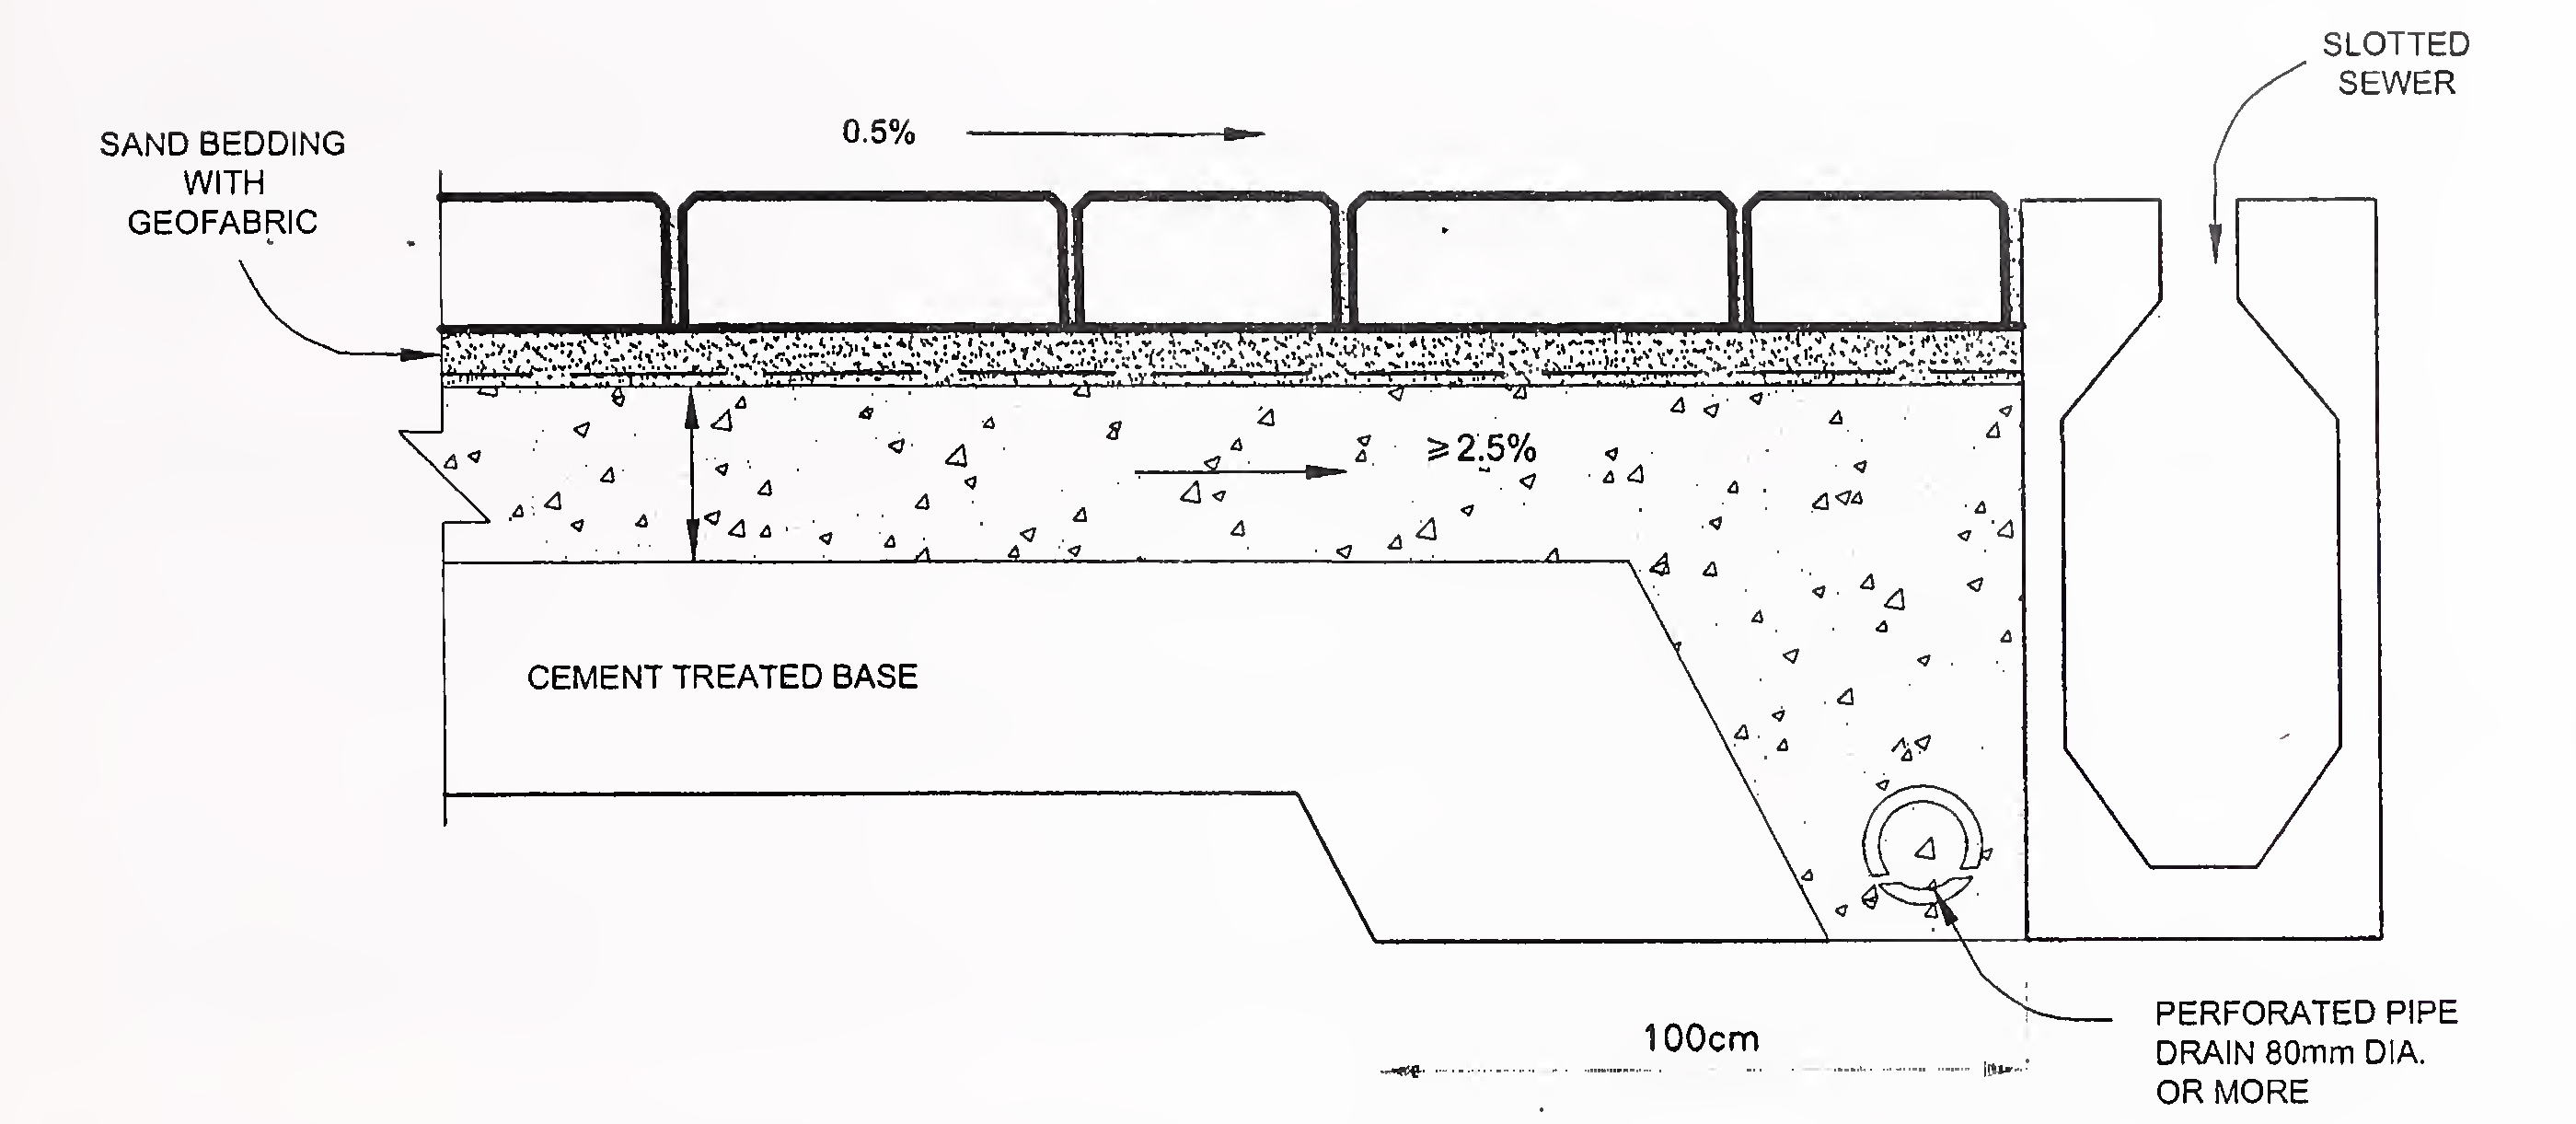 अंजीर। 11. एक आधार पाठ्यक्रम के साथ भारी तस्करी कंक्रीट ब्लॉक फुटपाथ संरचना